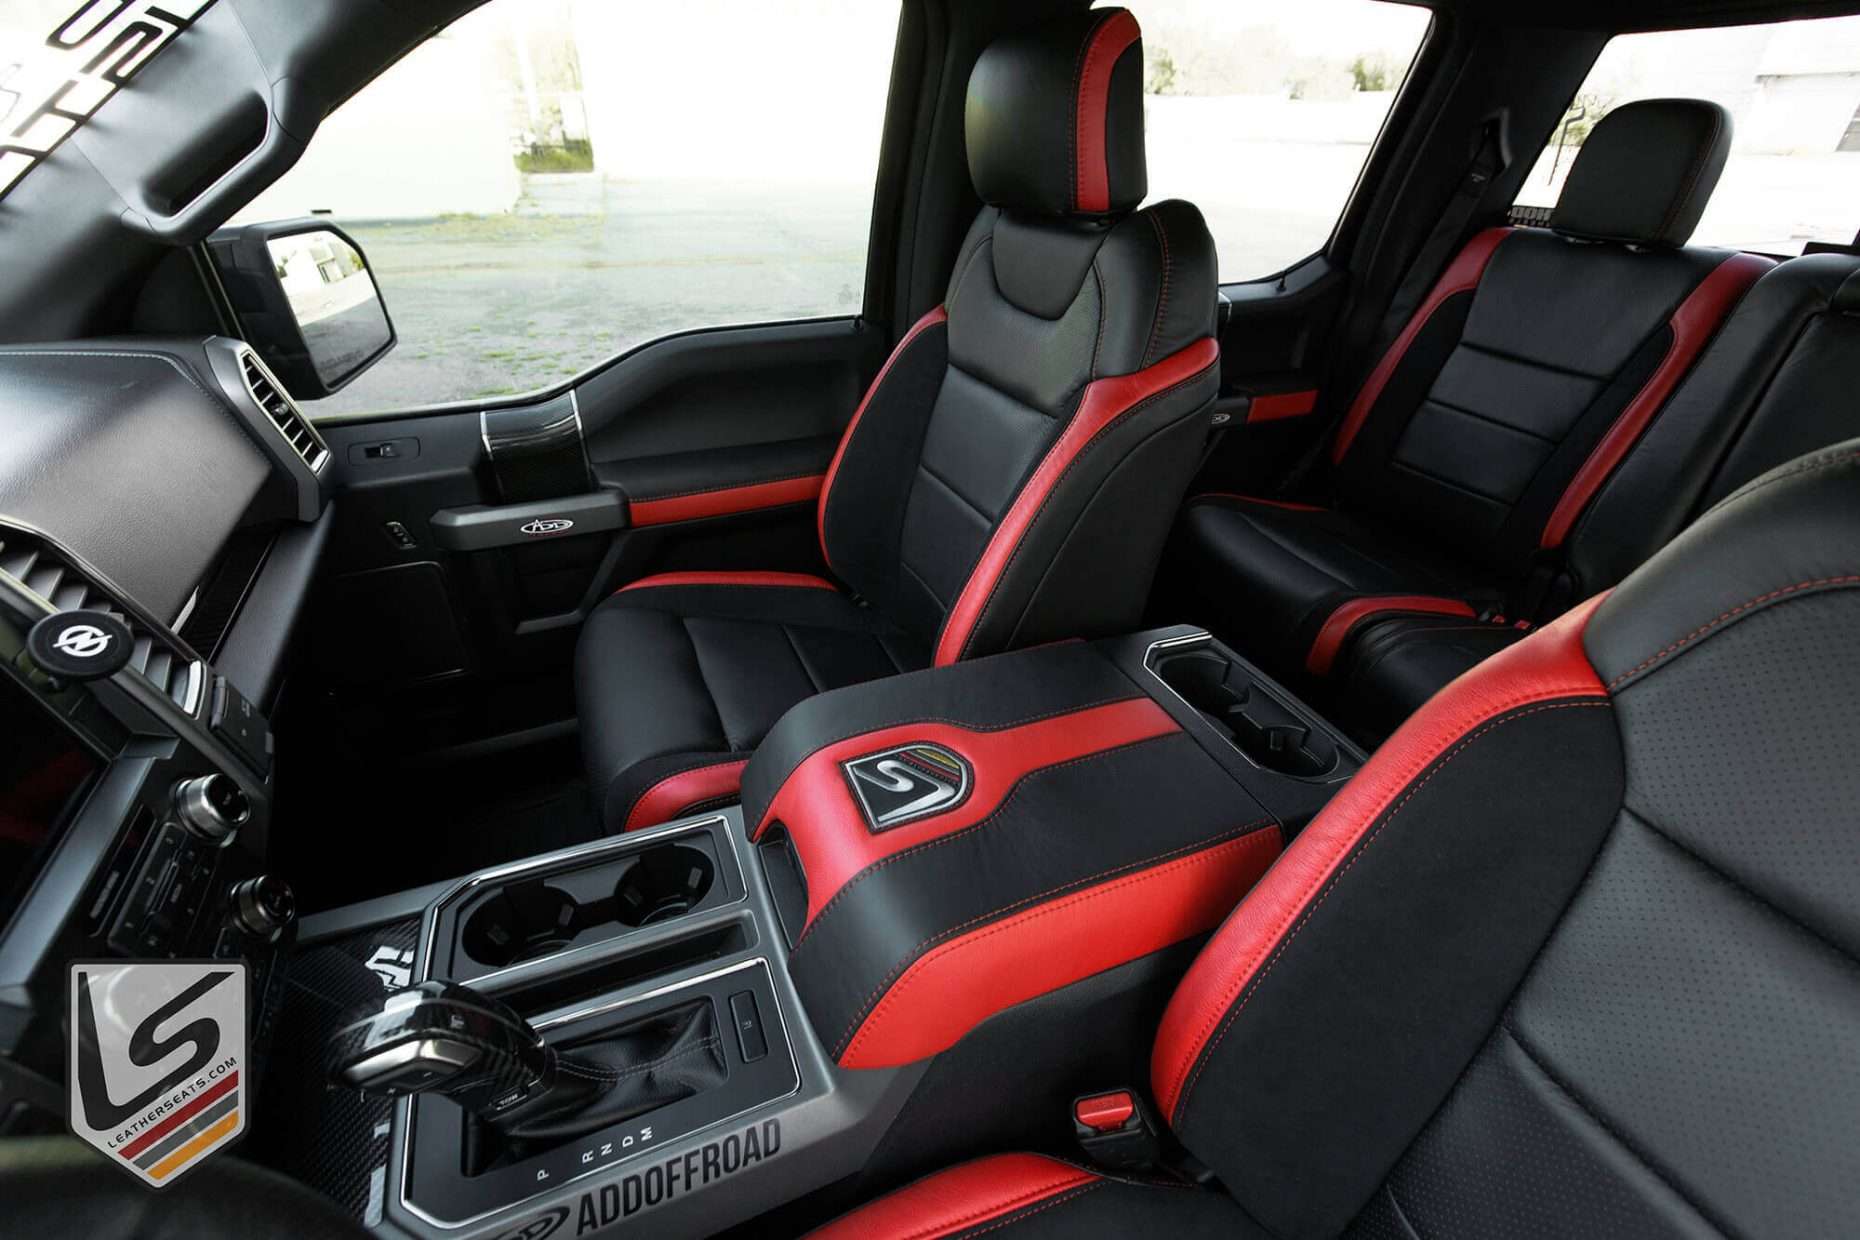 Leatherseats.com braded console & passenger leather seat